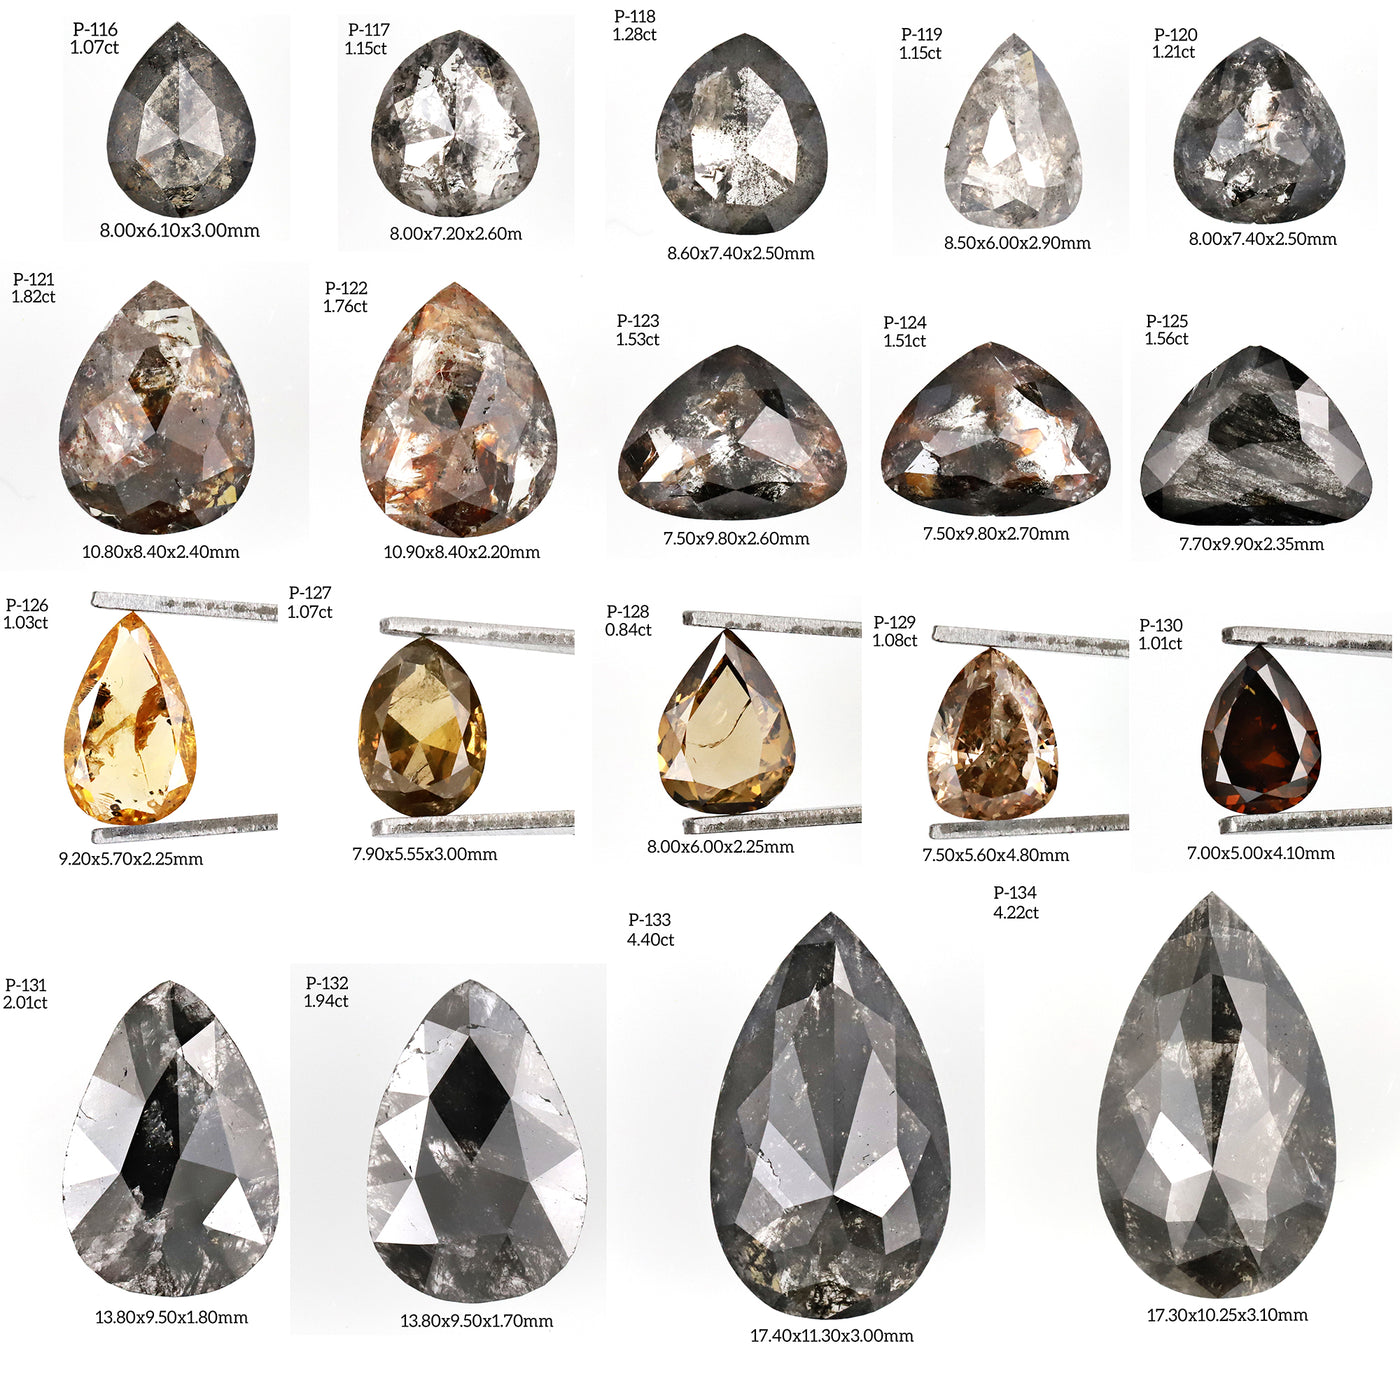 P115 - Salt and pepper pear diamond